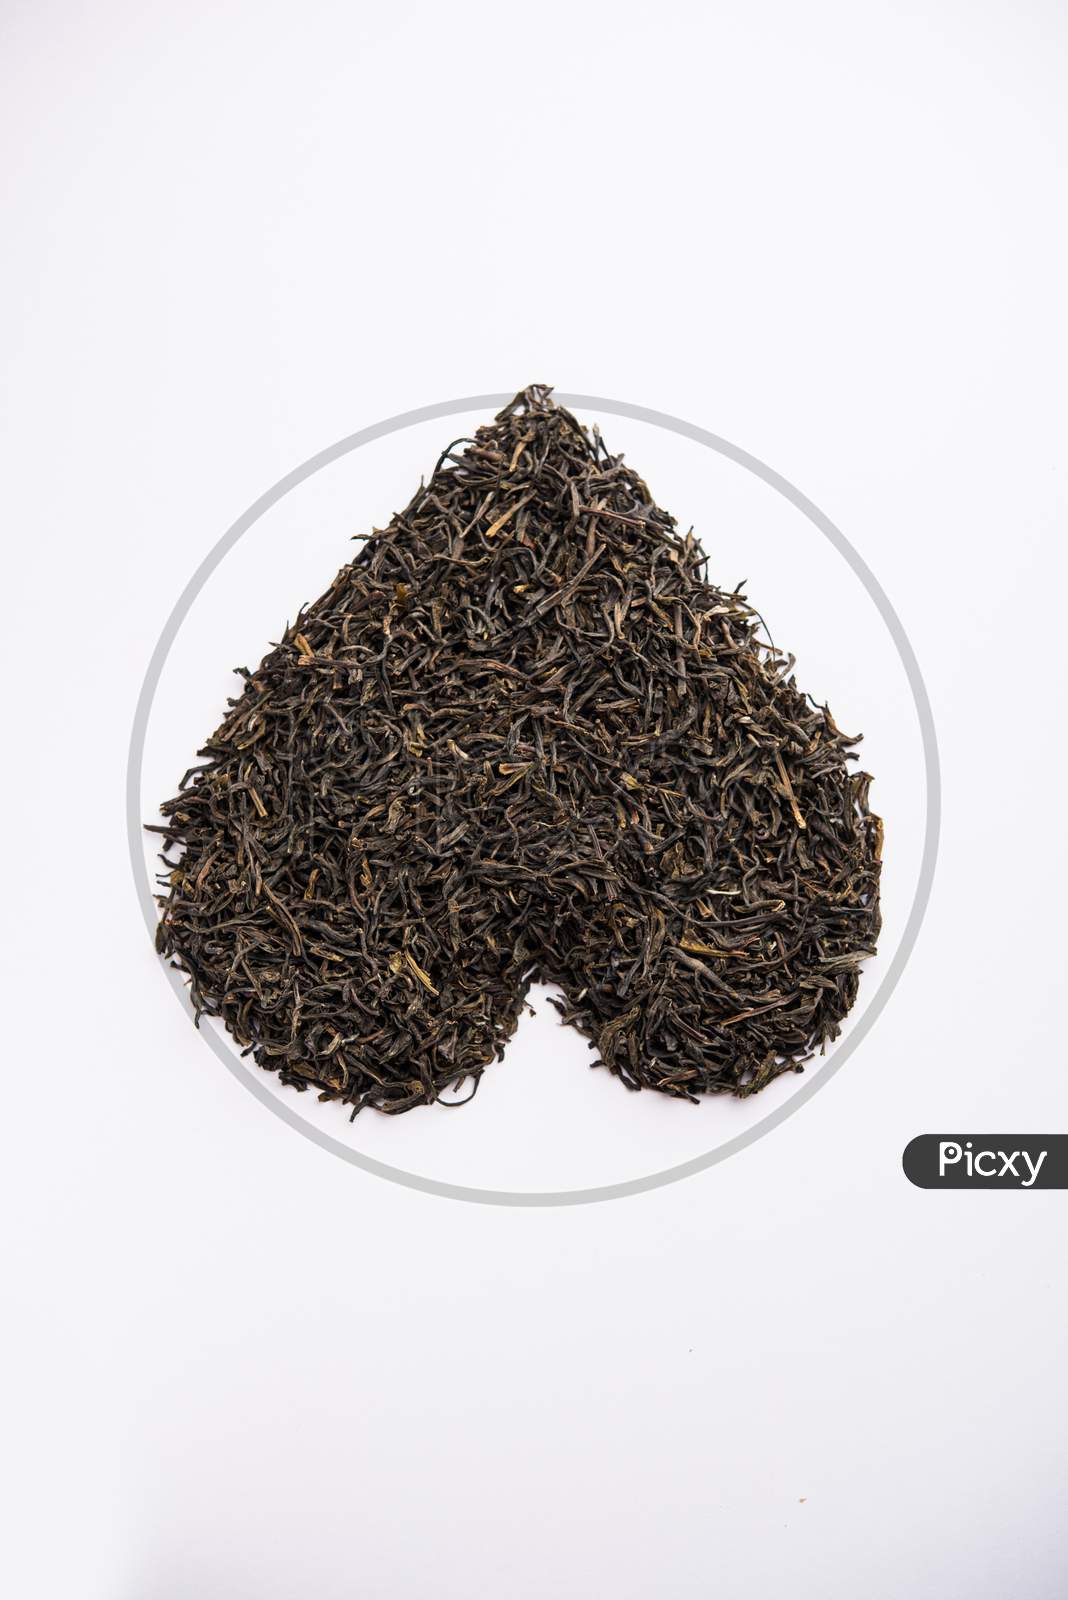 Black Tea Powder or dry dust used for making hot tea